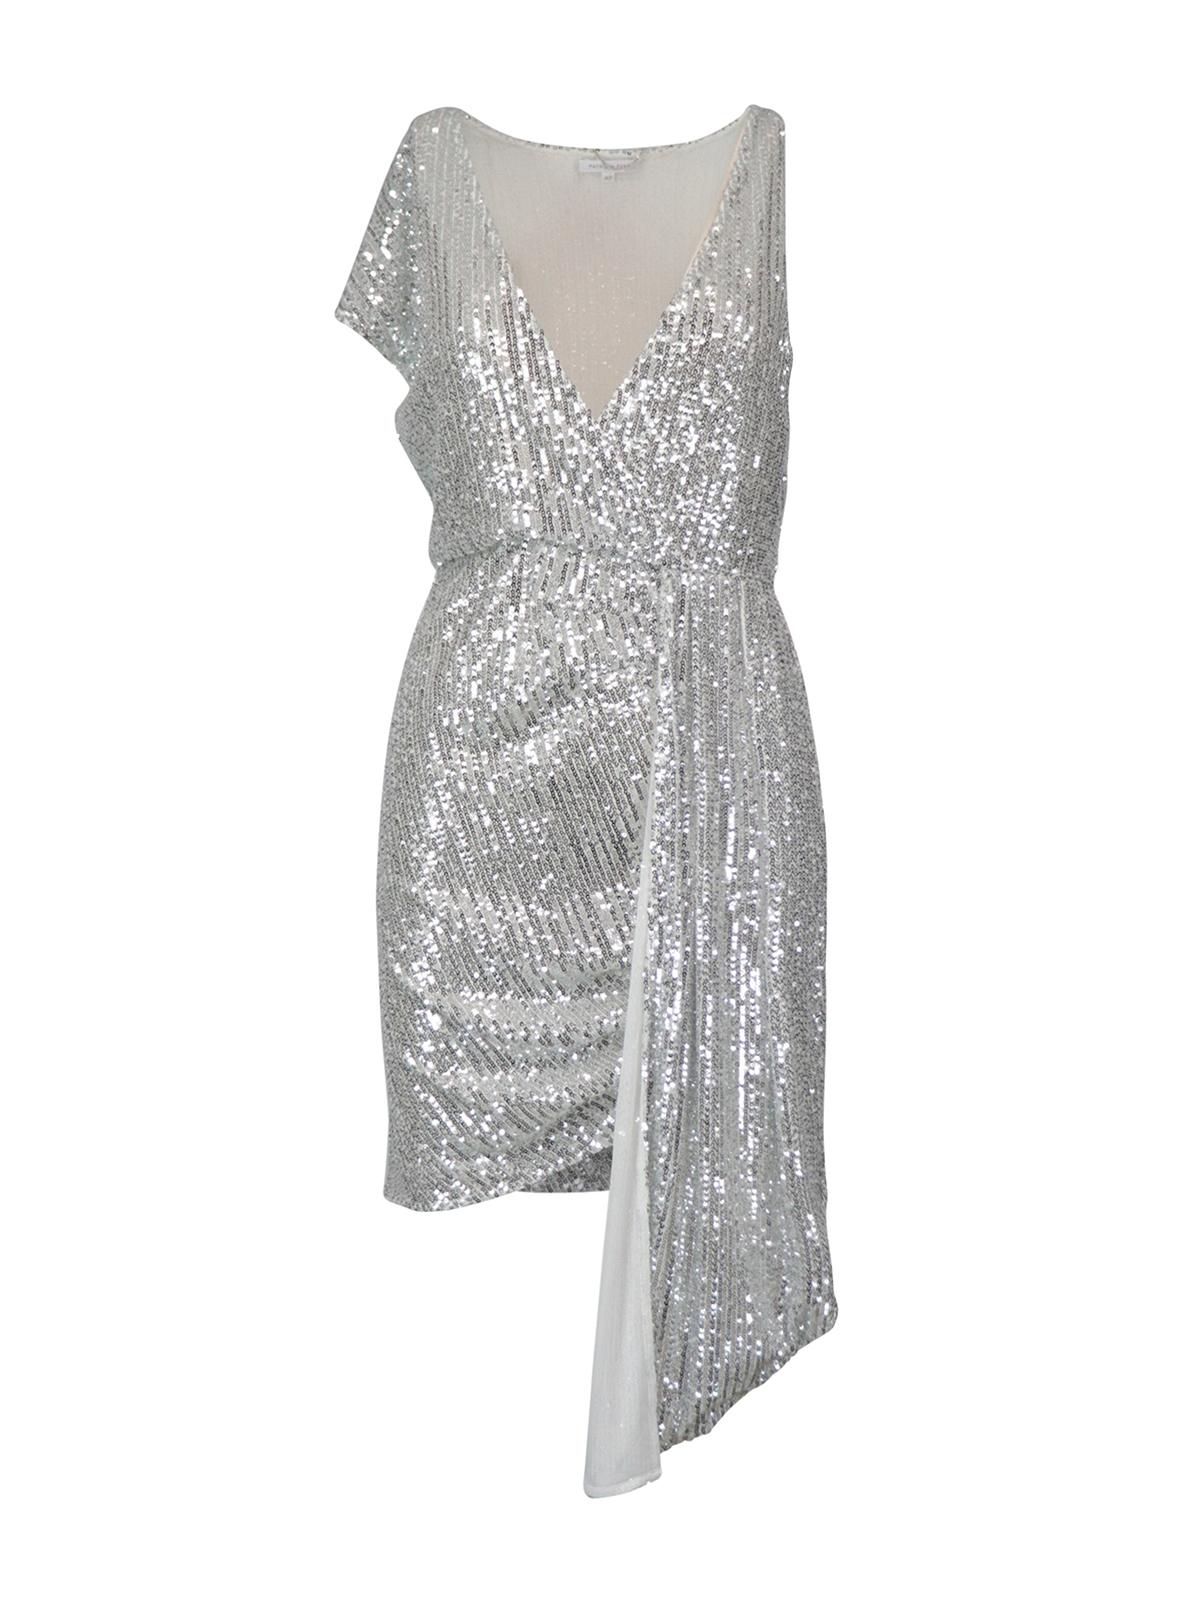 Patrizia Pepe Tulle Draped Sequin Mini Dress in Silver (Metallic) - Lyst